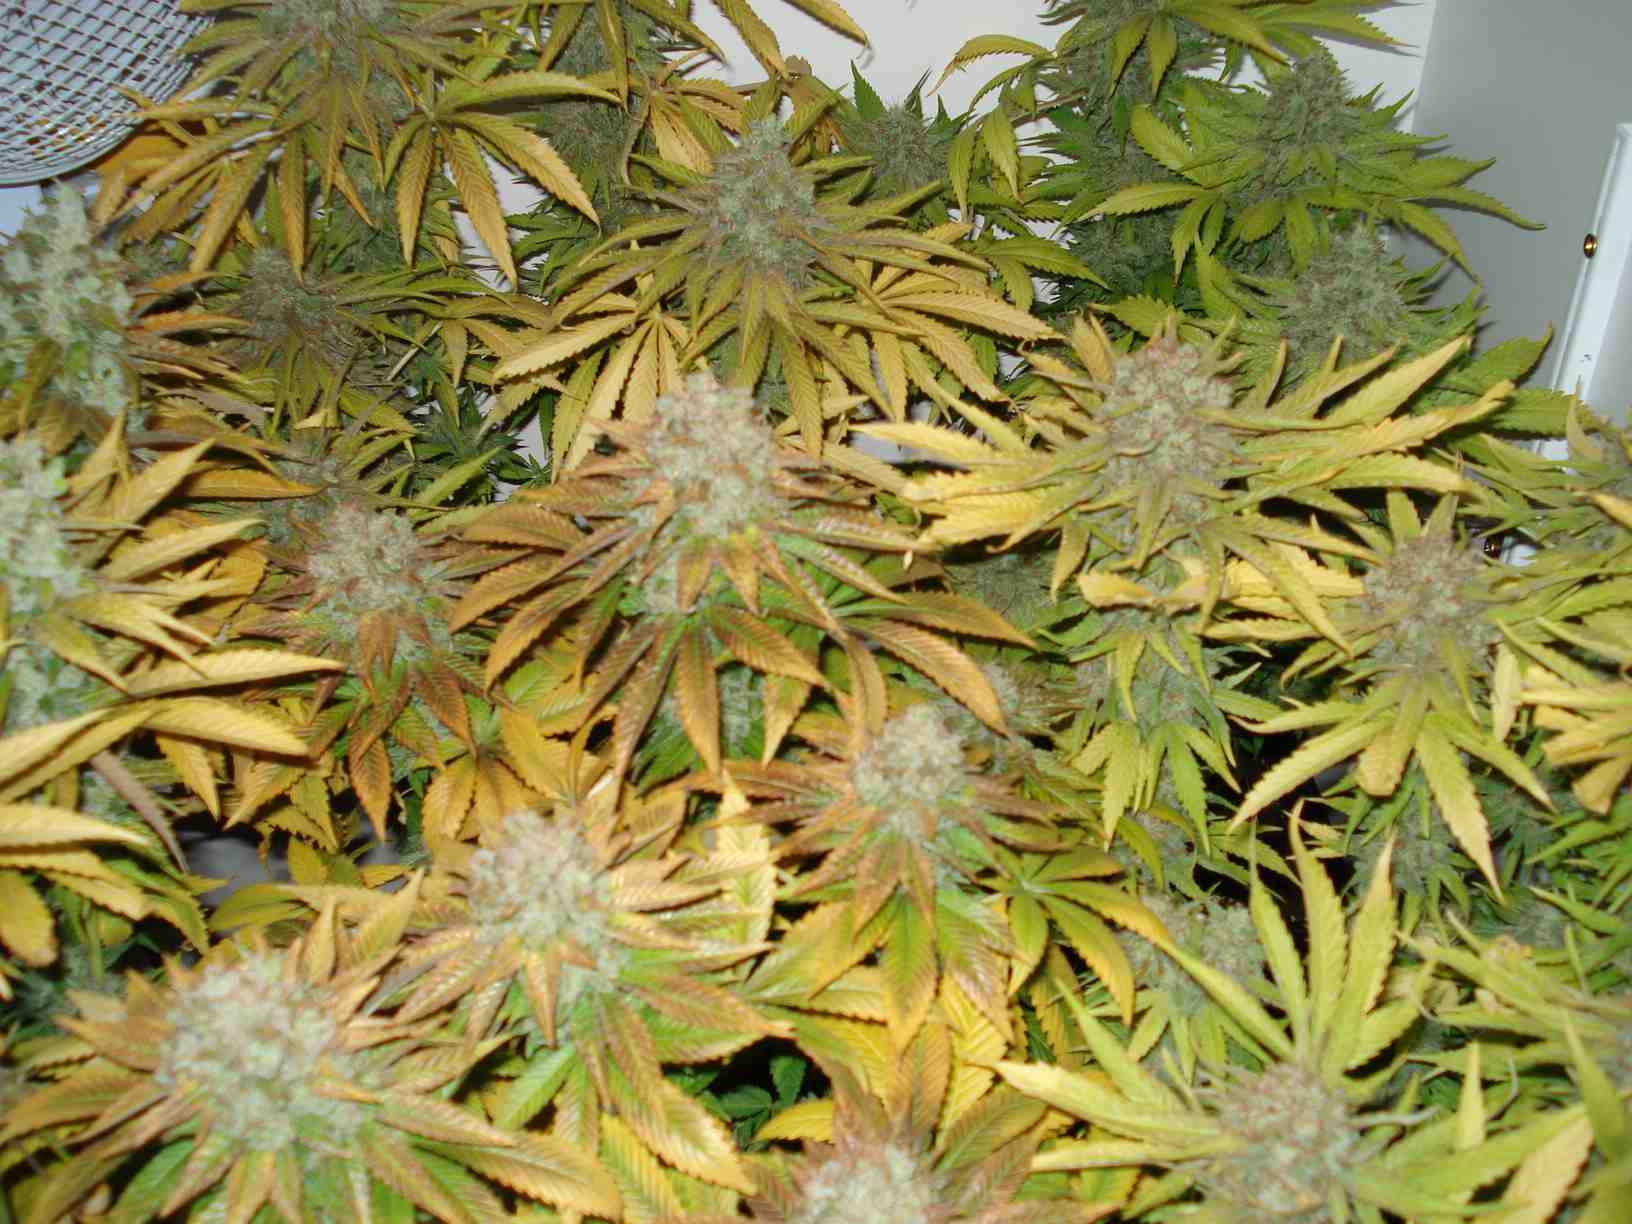 Sensi > Cannabis Forum: White label northern lights harvest?